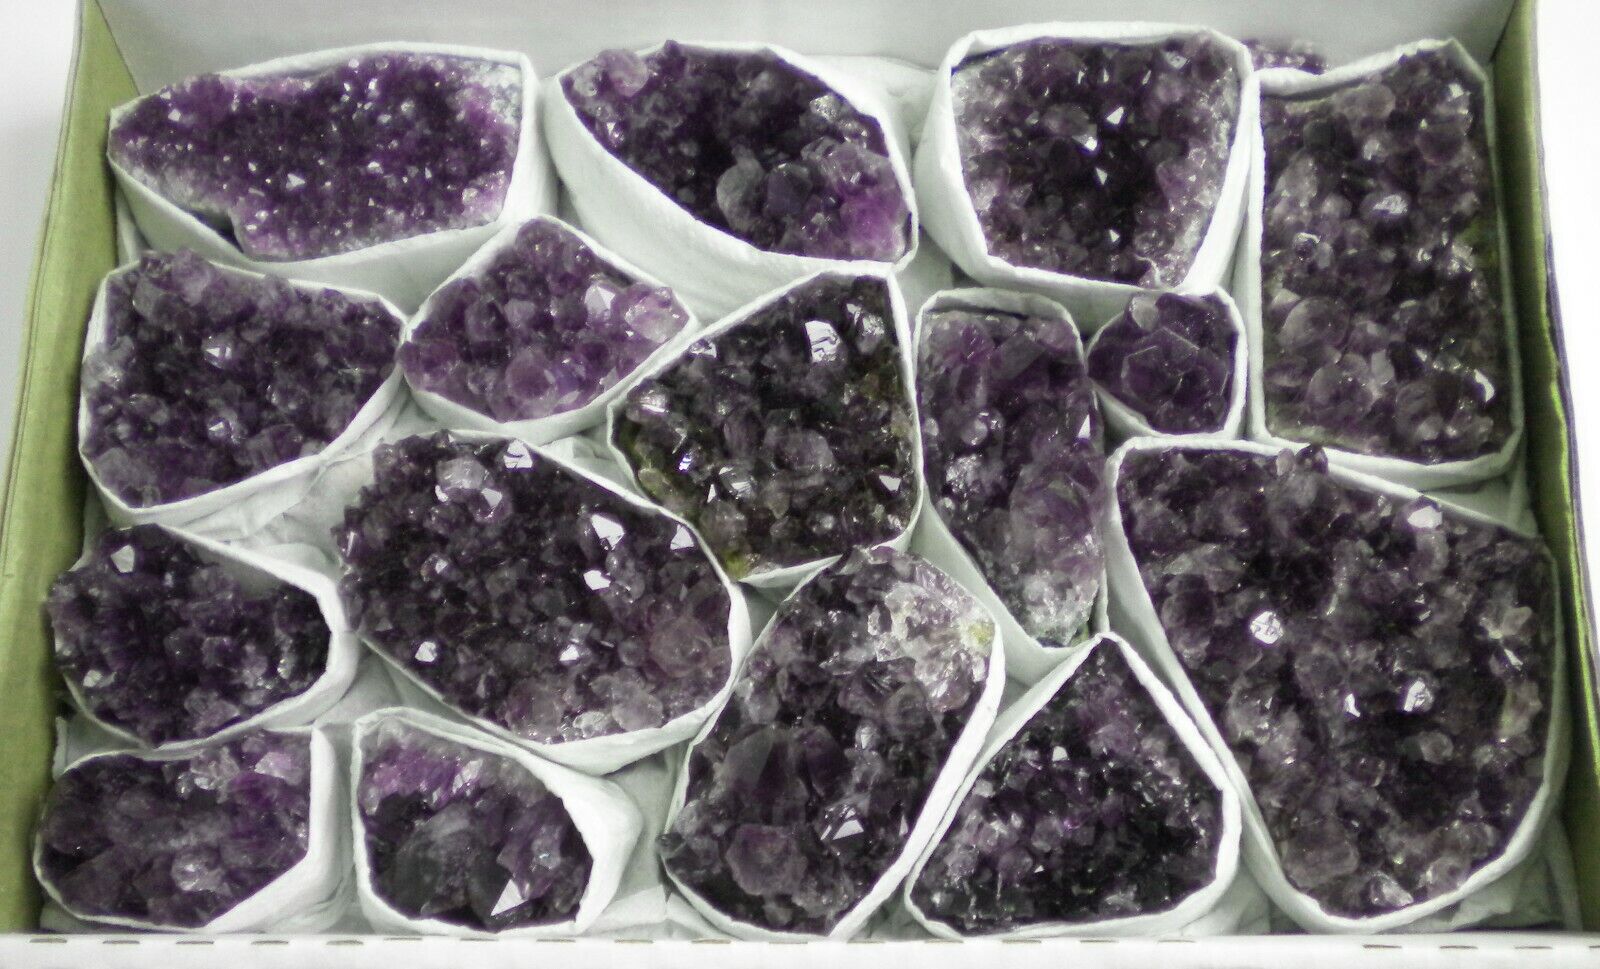 16 Pc Lot Flat Amethyst Crystal Geode Cluster - 2 lbs 13 oz -  Bulk  - AMY273